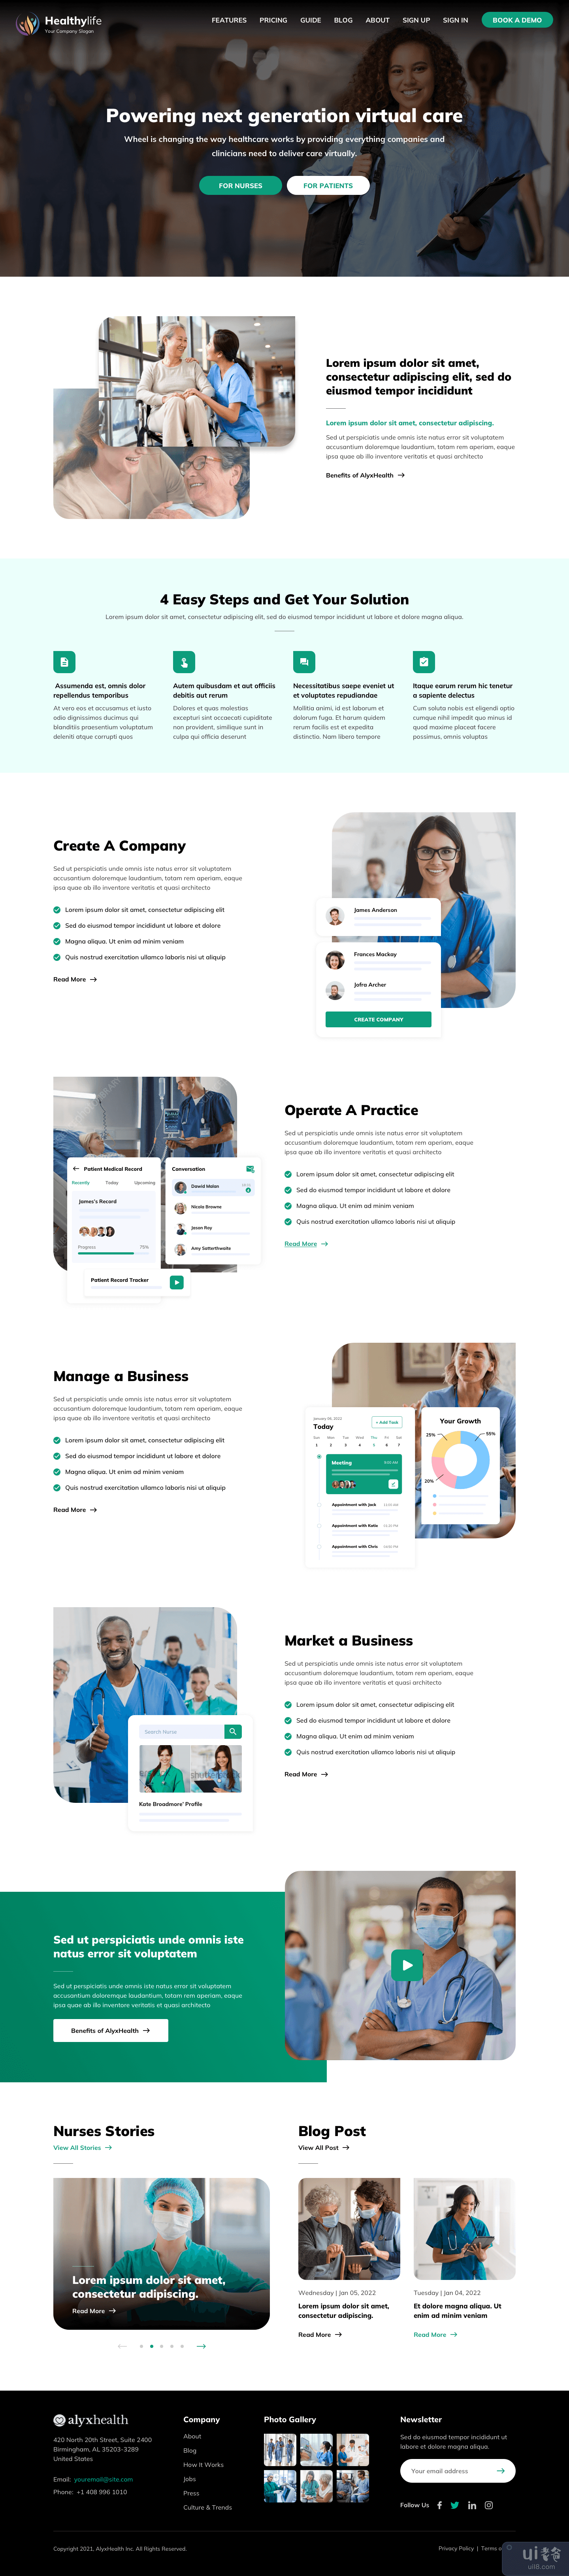 医疗保健网站登陆页面重新设计(Health Care Website Landing Page Redesign)插图